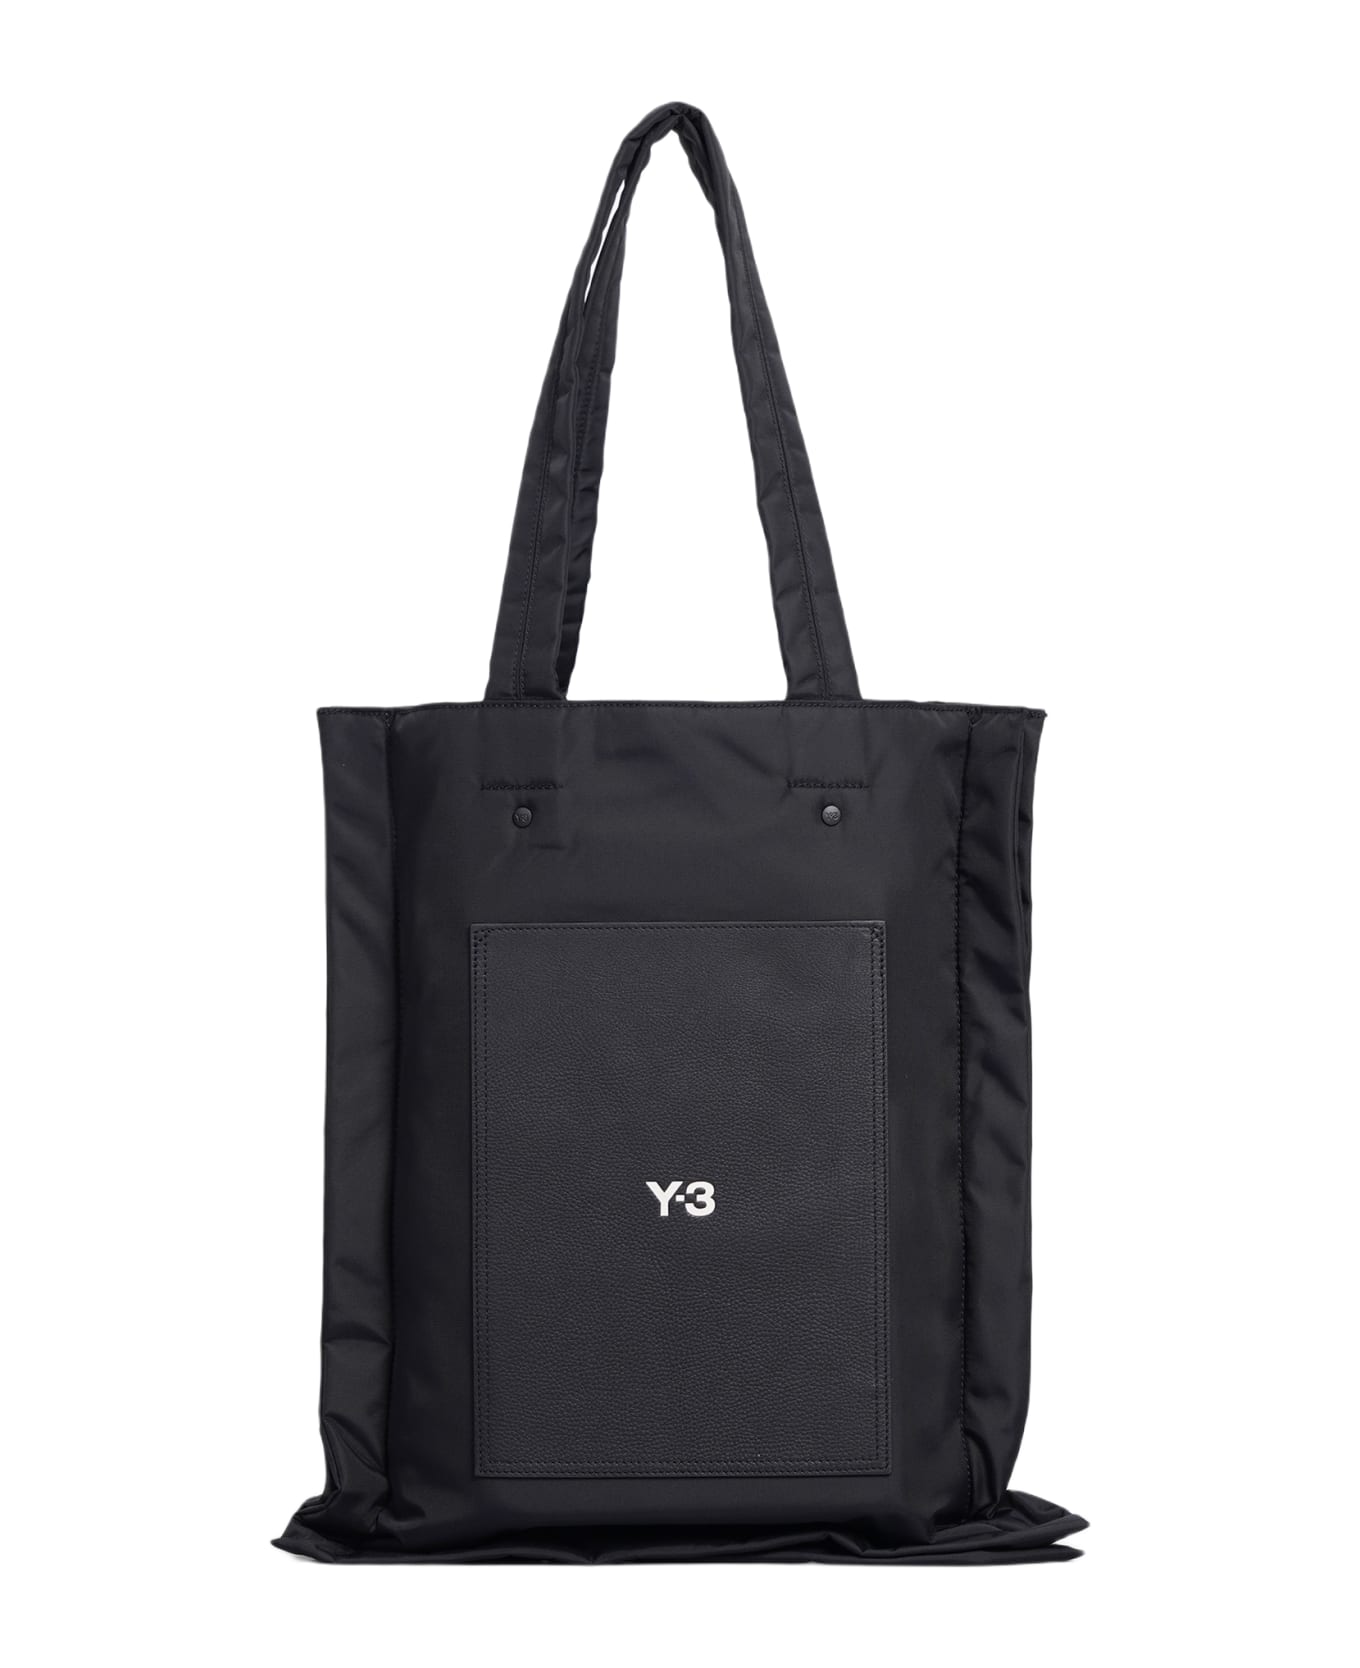 Y-3 Nylon Tote Bag - BLACK (Black)